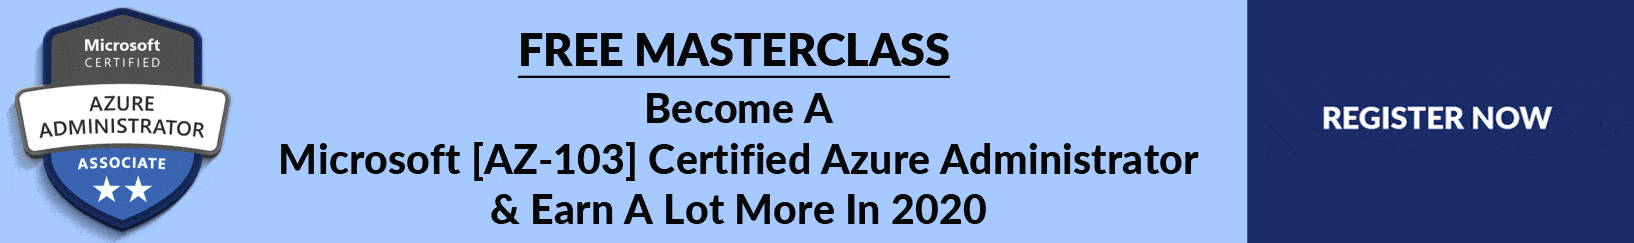 free master class az103